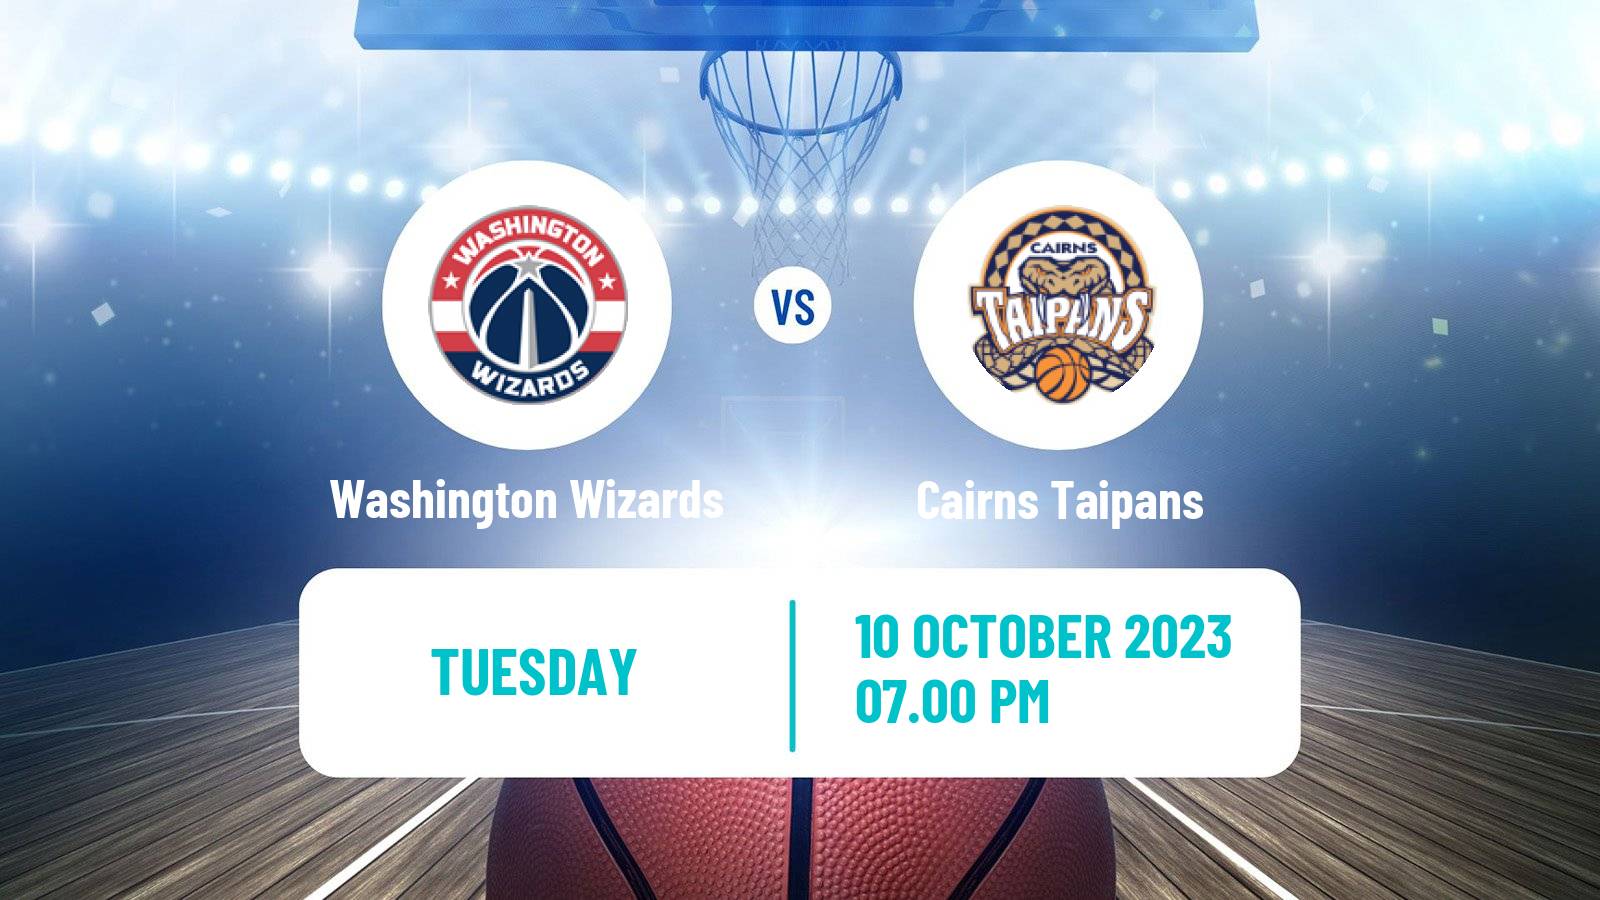 Basketball Club Friendly Basketball Washington Wizards - Cairns Taipans